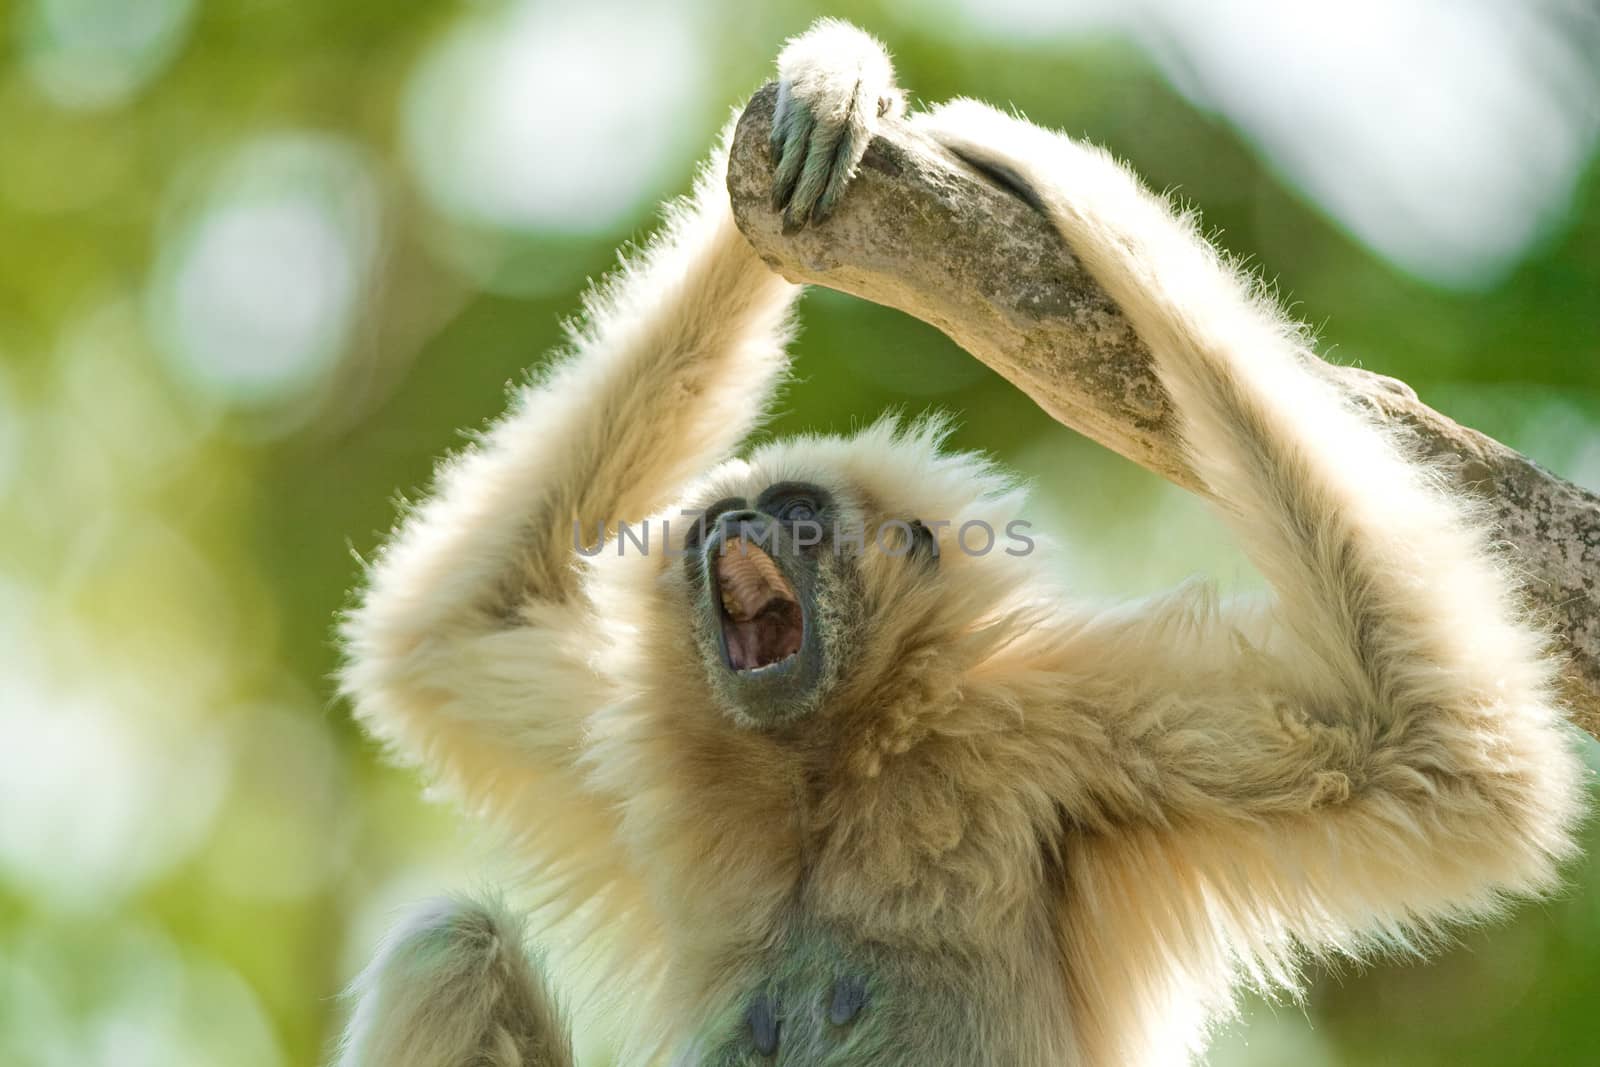 White-Handed Gibbon by CelsoDiniz